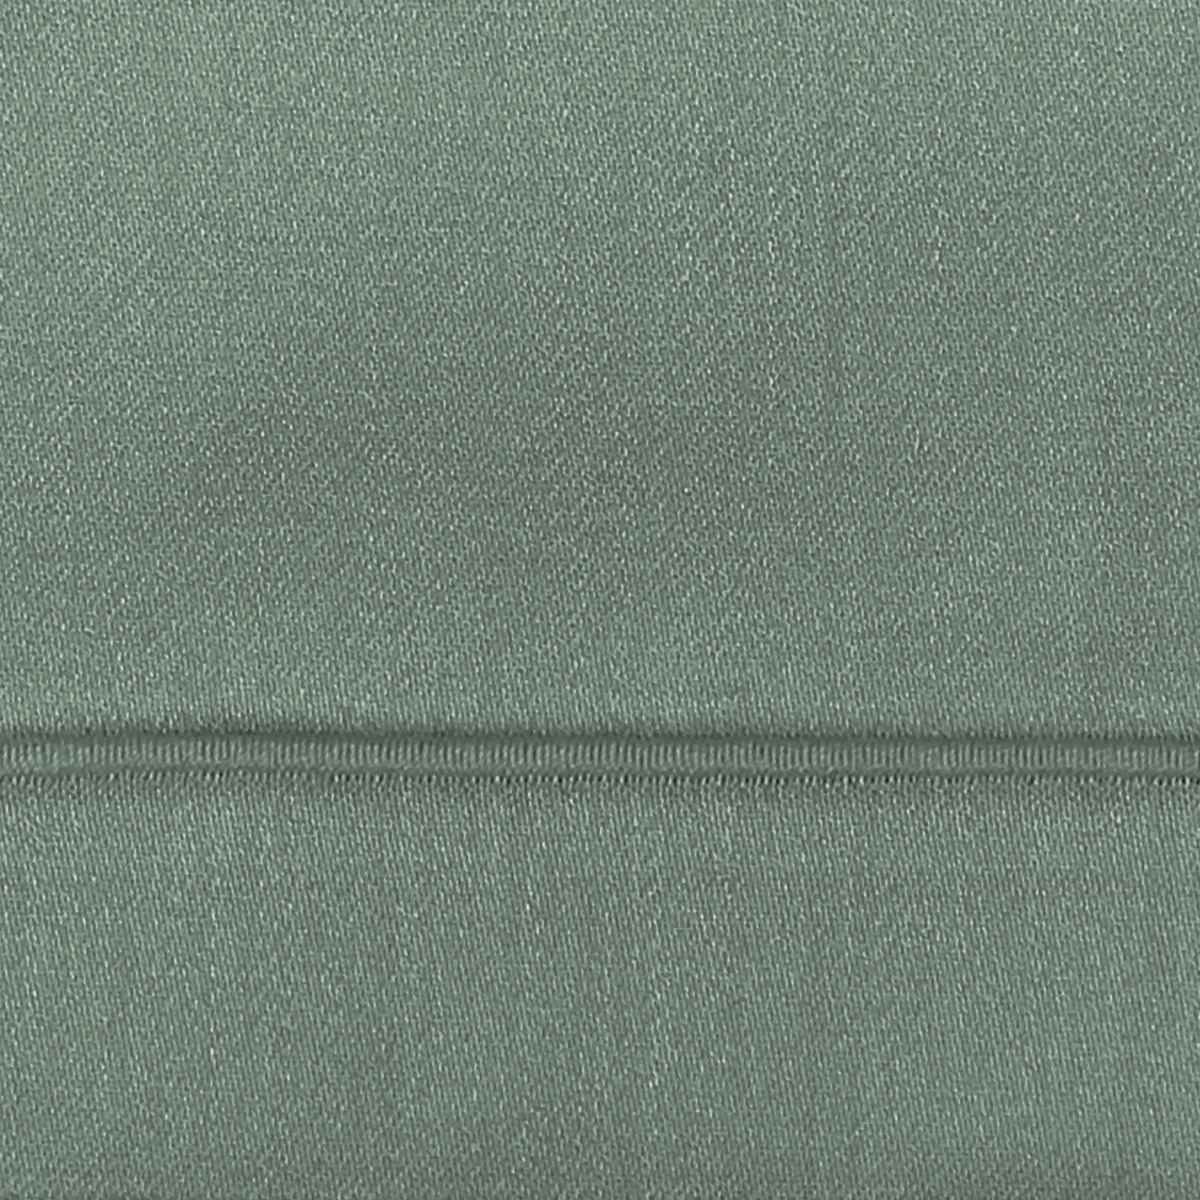 Matouk Talita Satin Stitch Bedding Swatch Celadon Fine Linens